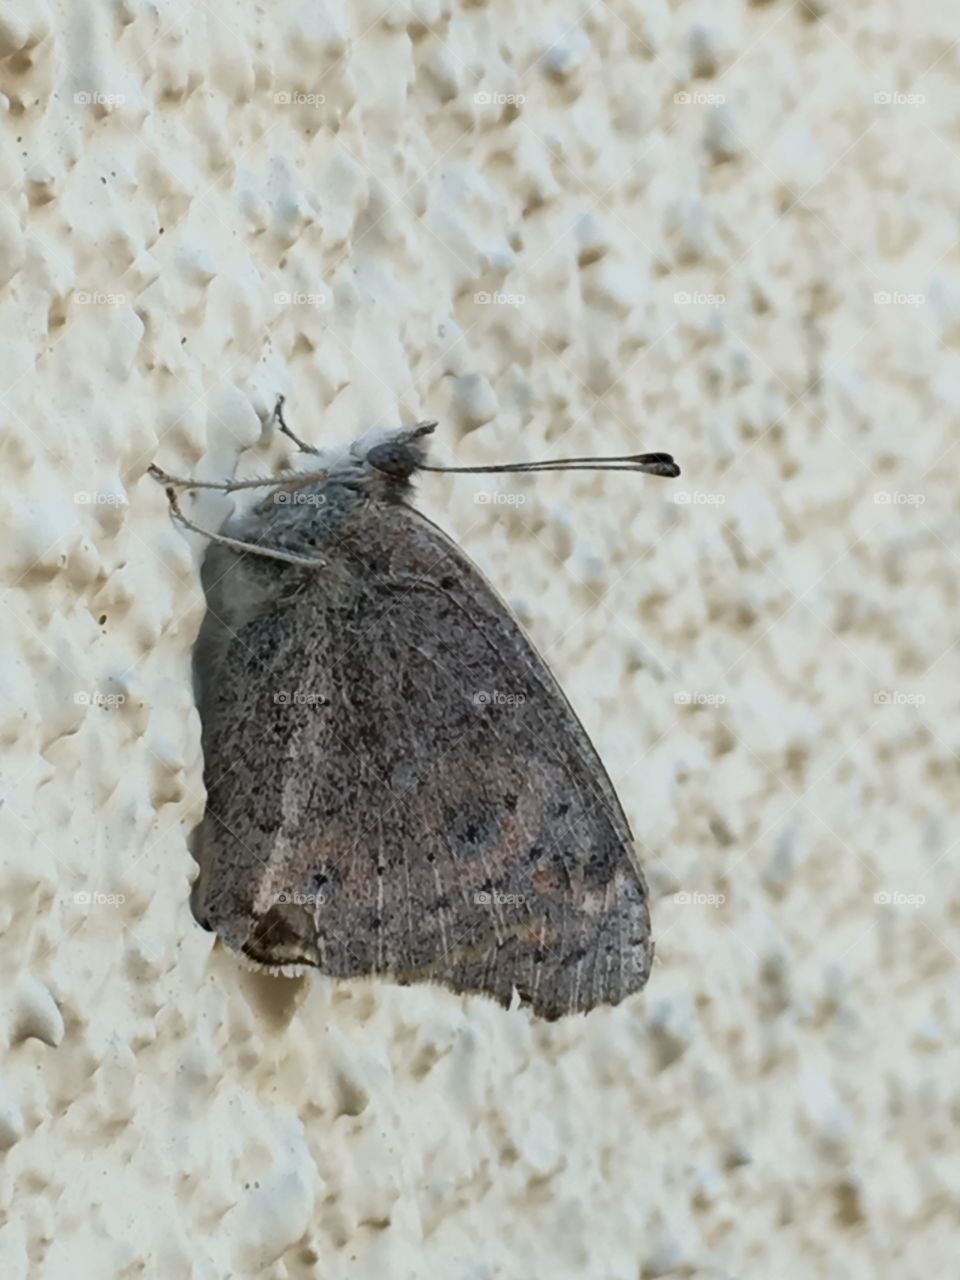 Closeup grey moth on a textured stucco outdoor wall